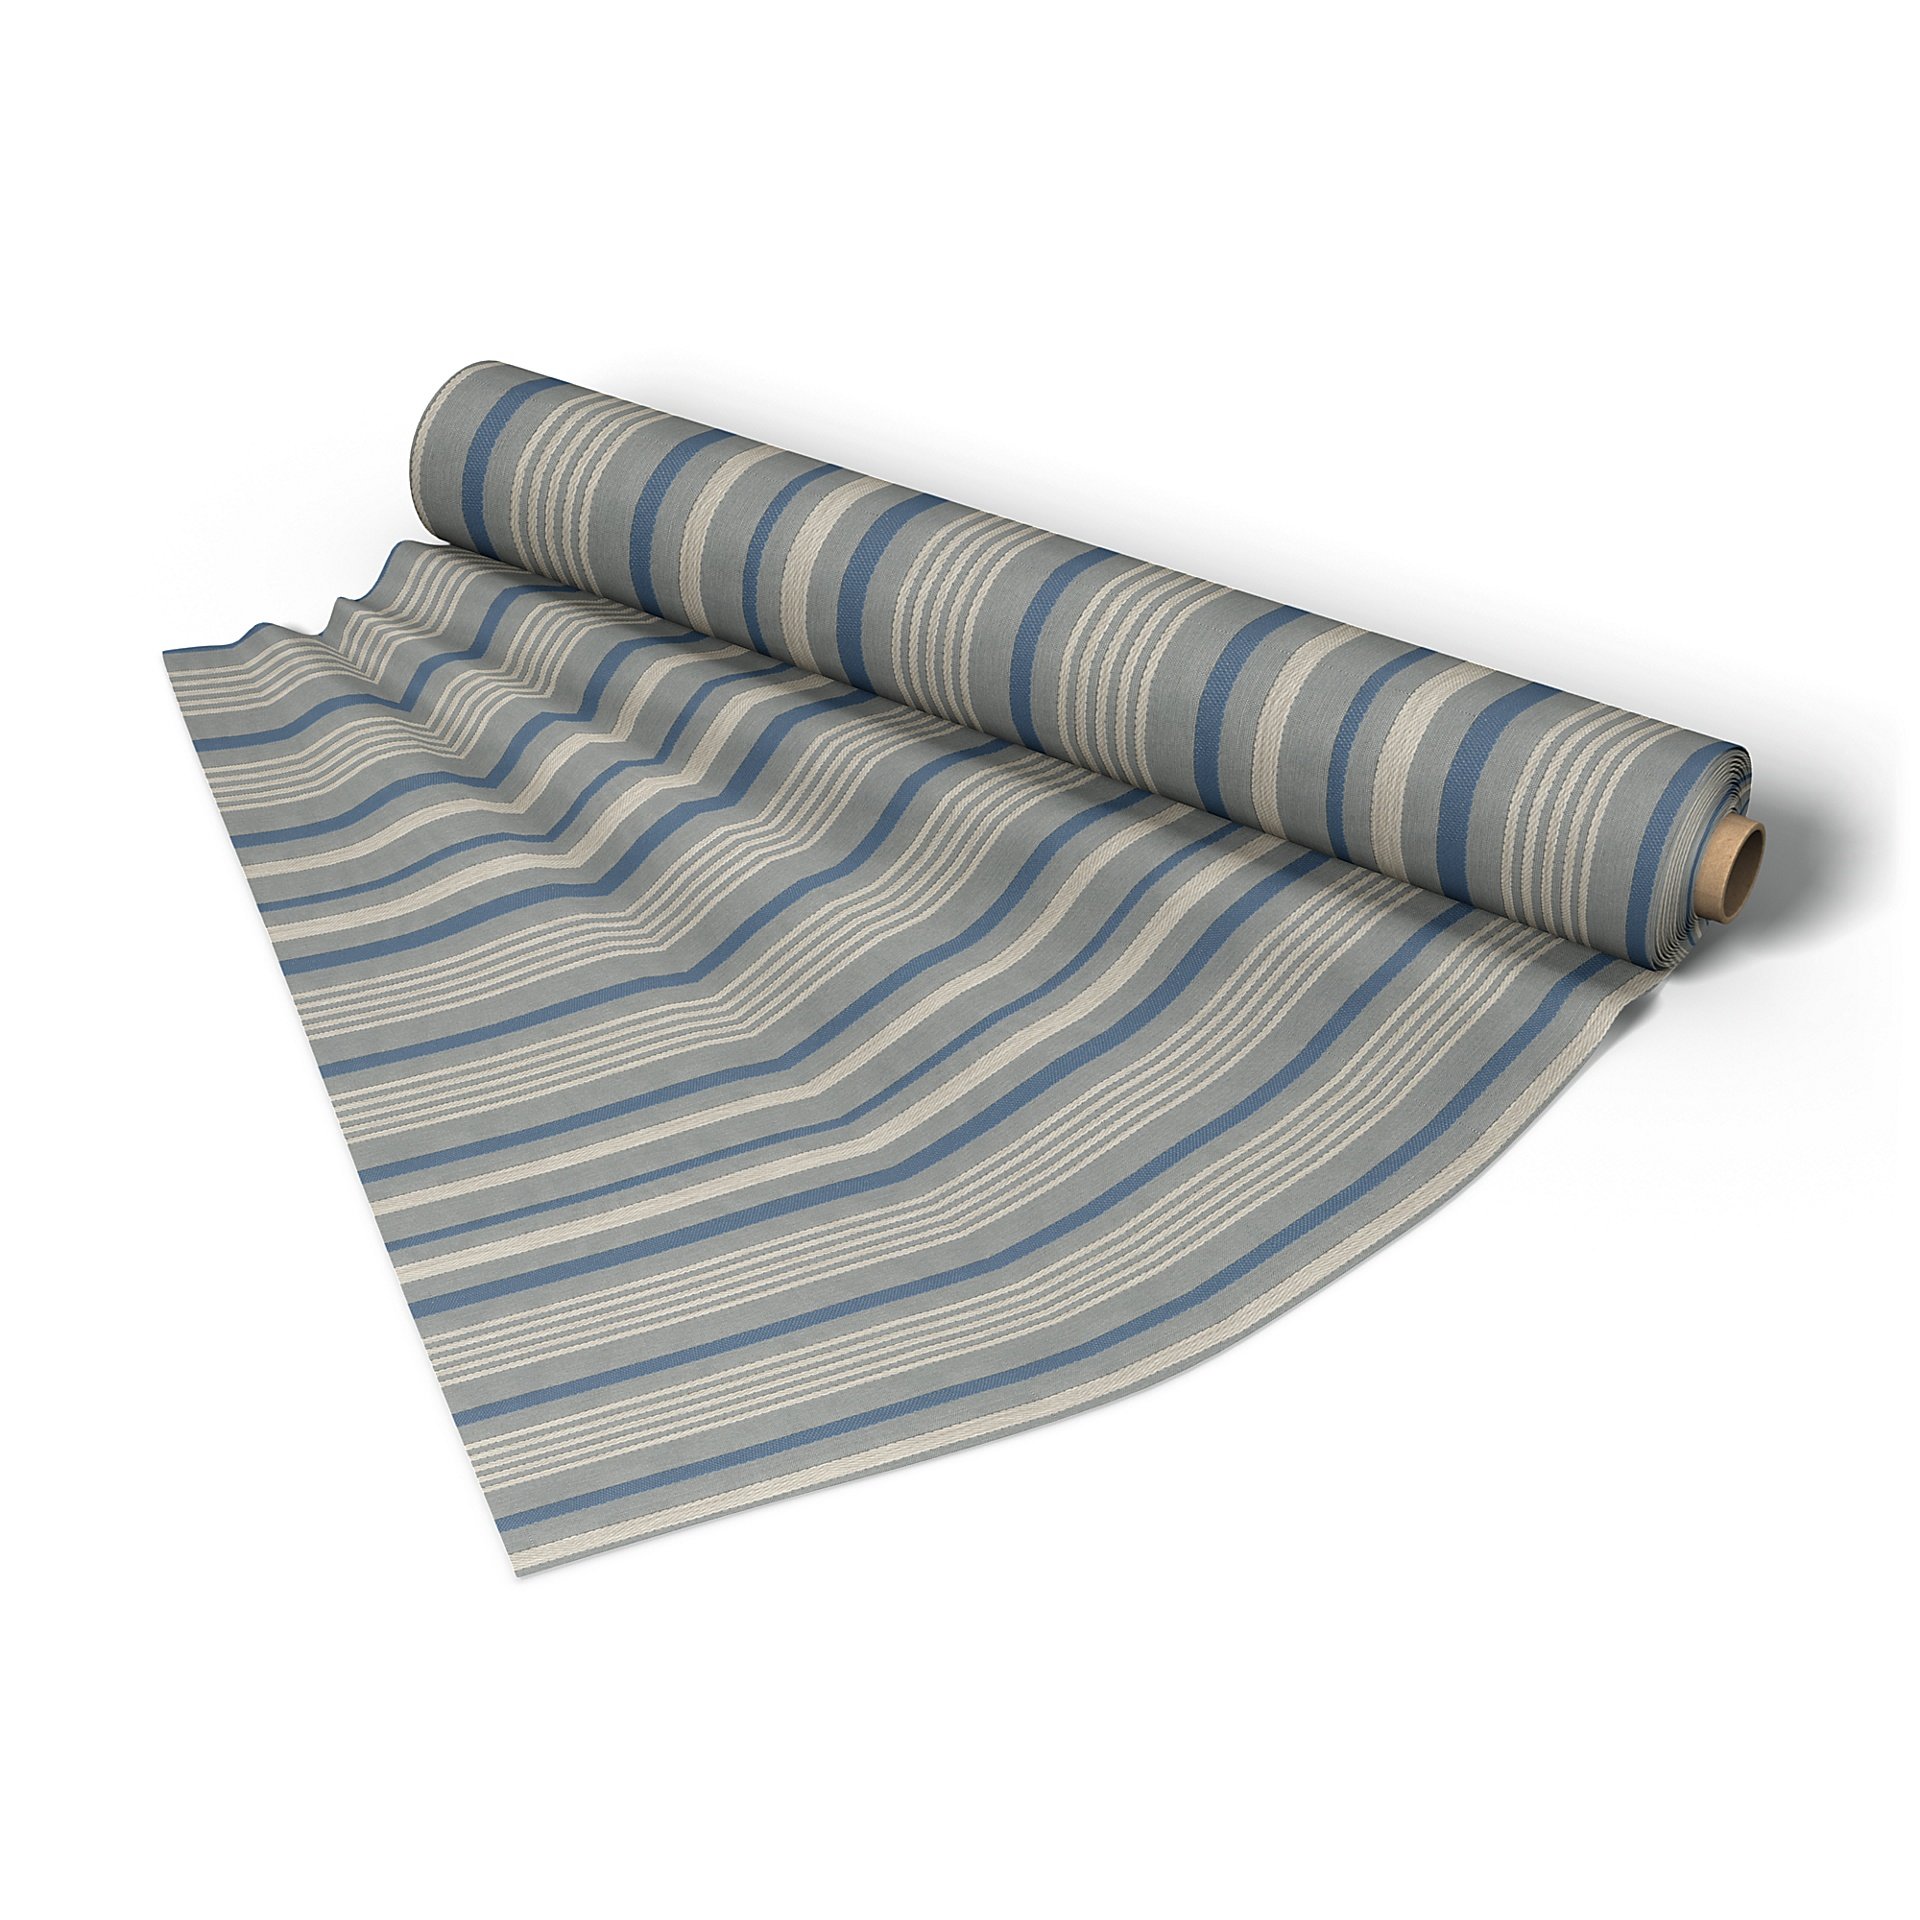 Fabric per metre, Ocean Blue, Outdoor - Bemz